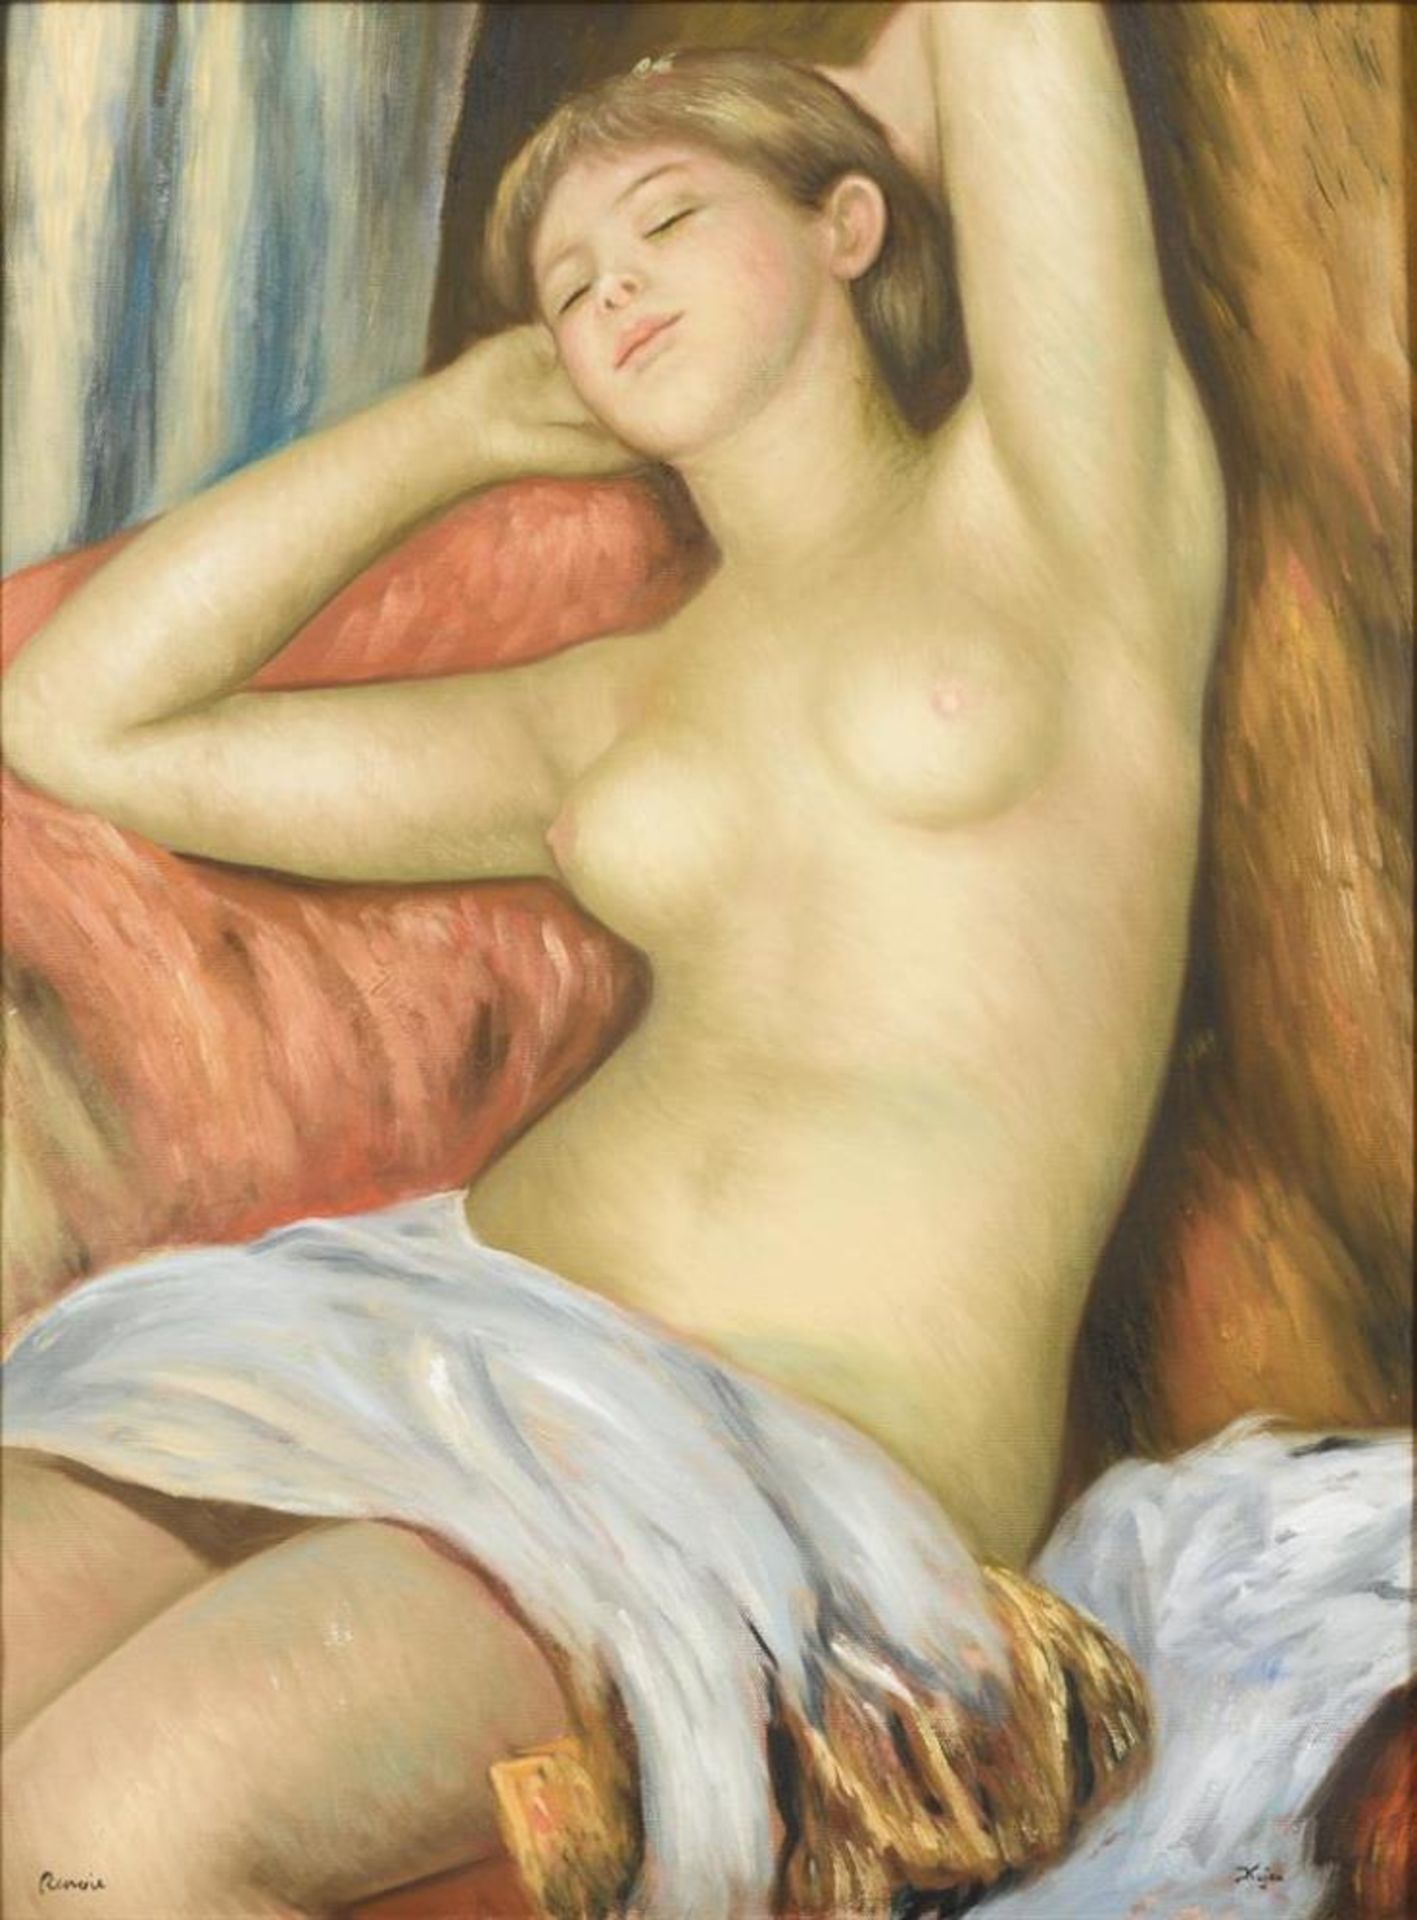 Kopie nach Pierre-Auguste Renoir "La Dormeuse"